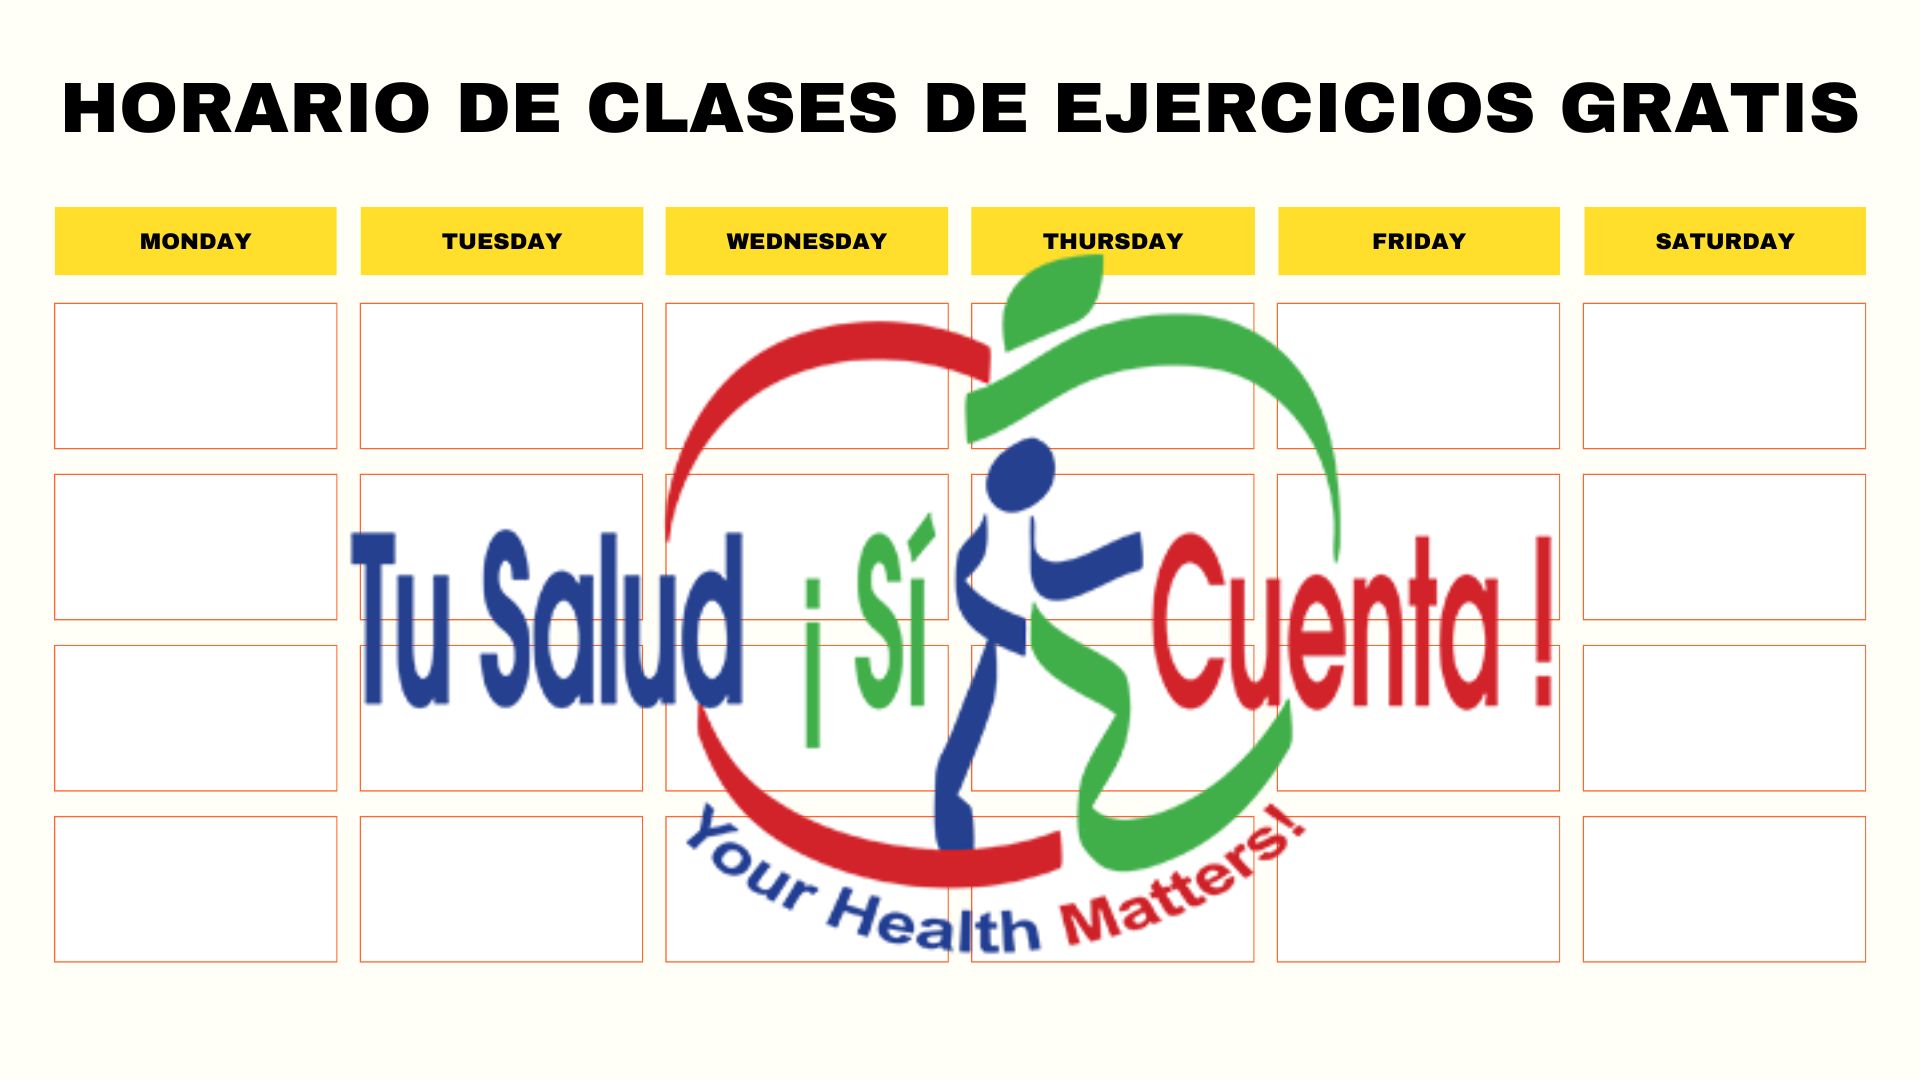 Exercise Schedule Spanish